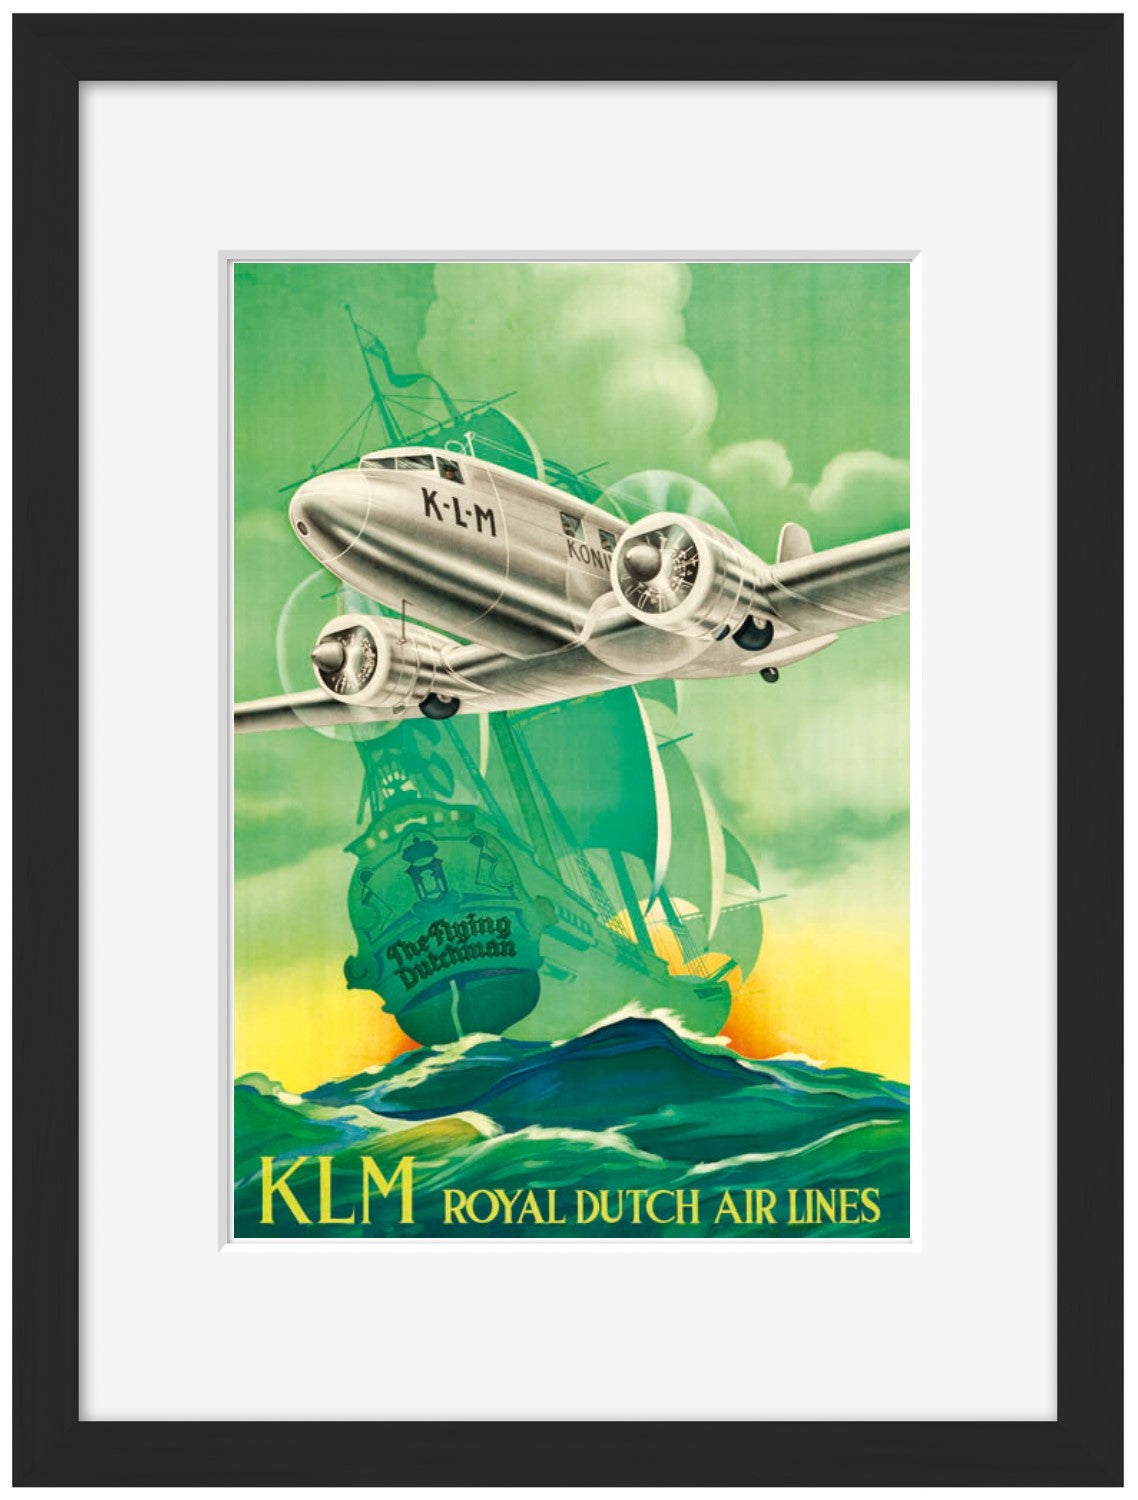 KLM Royal Dutch Air Lines-airlines, print-Framed Print-30 x 40 cm-BLUE SHAKER